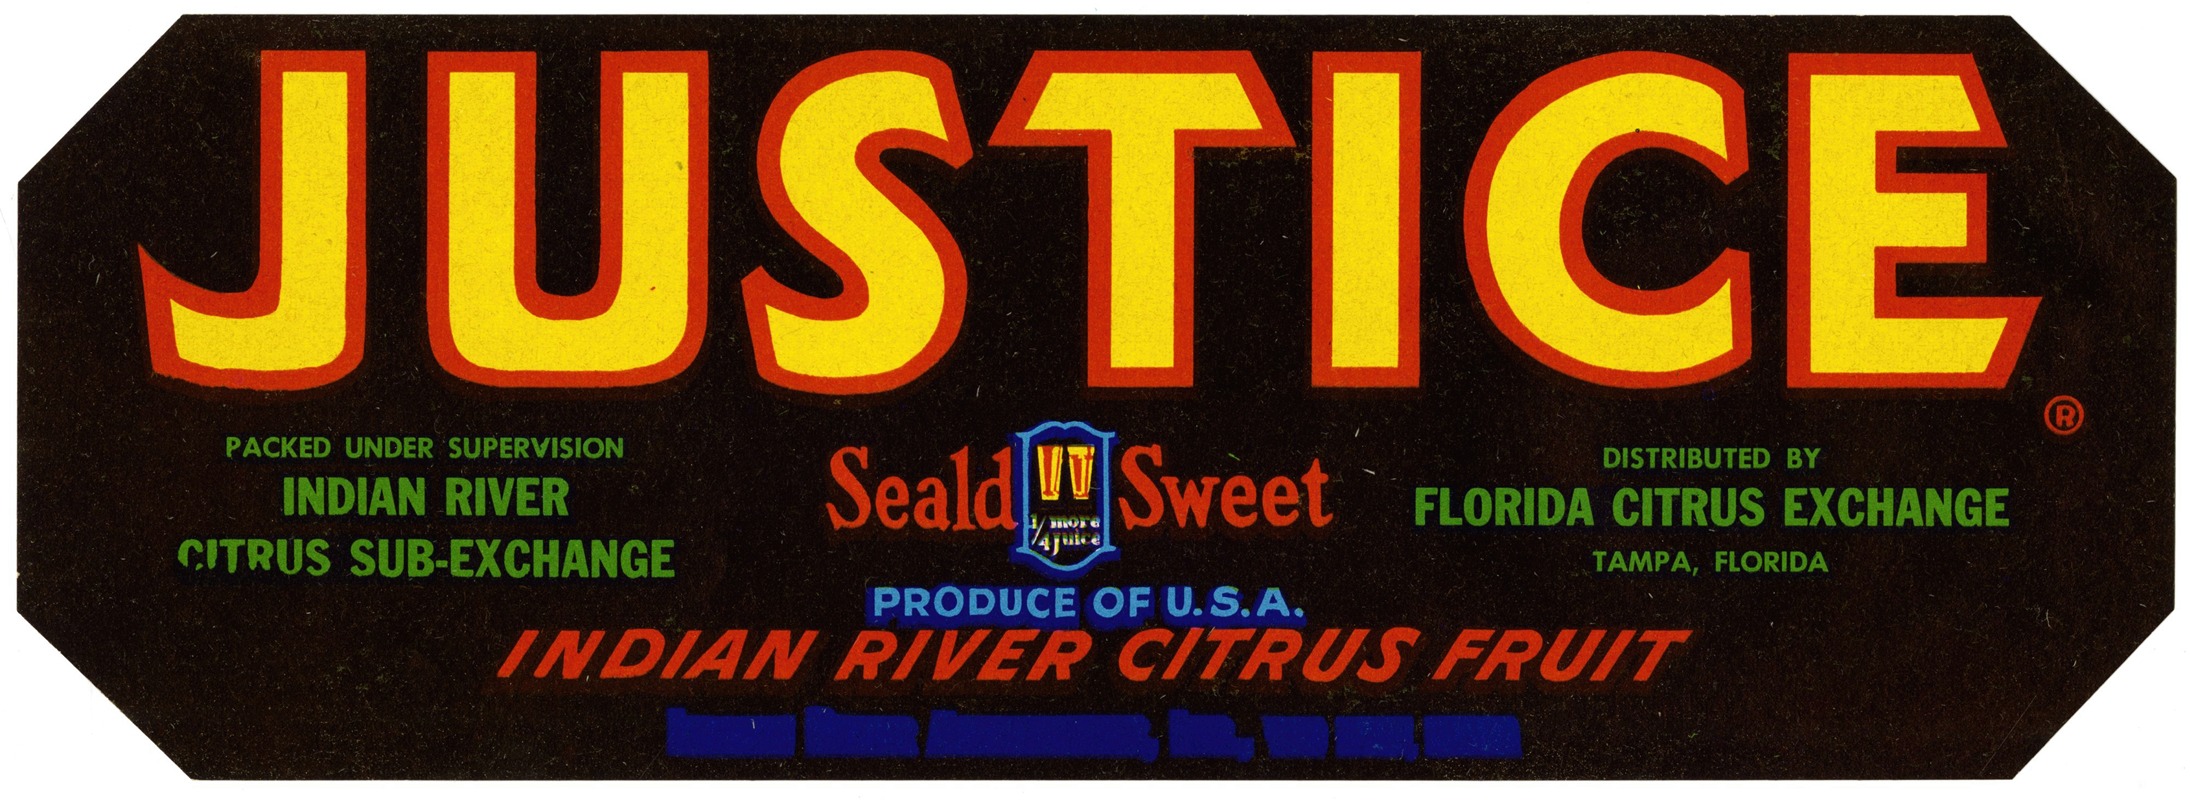 Anonymous - Justice Citrus Label